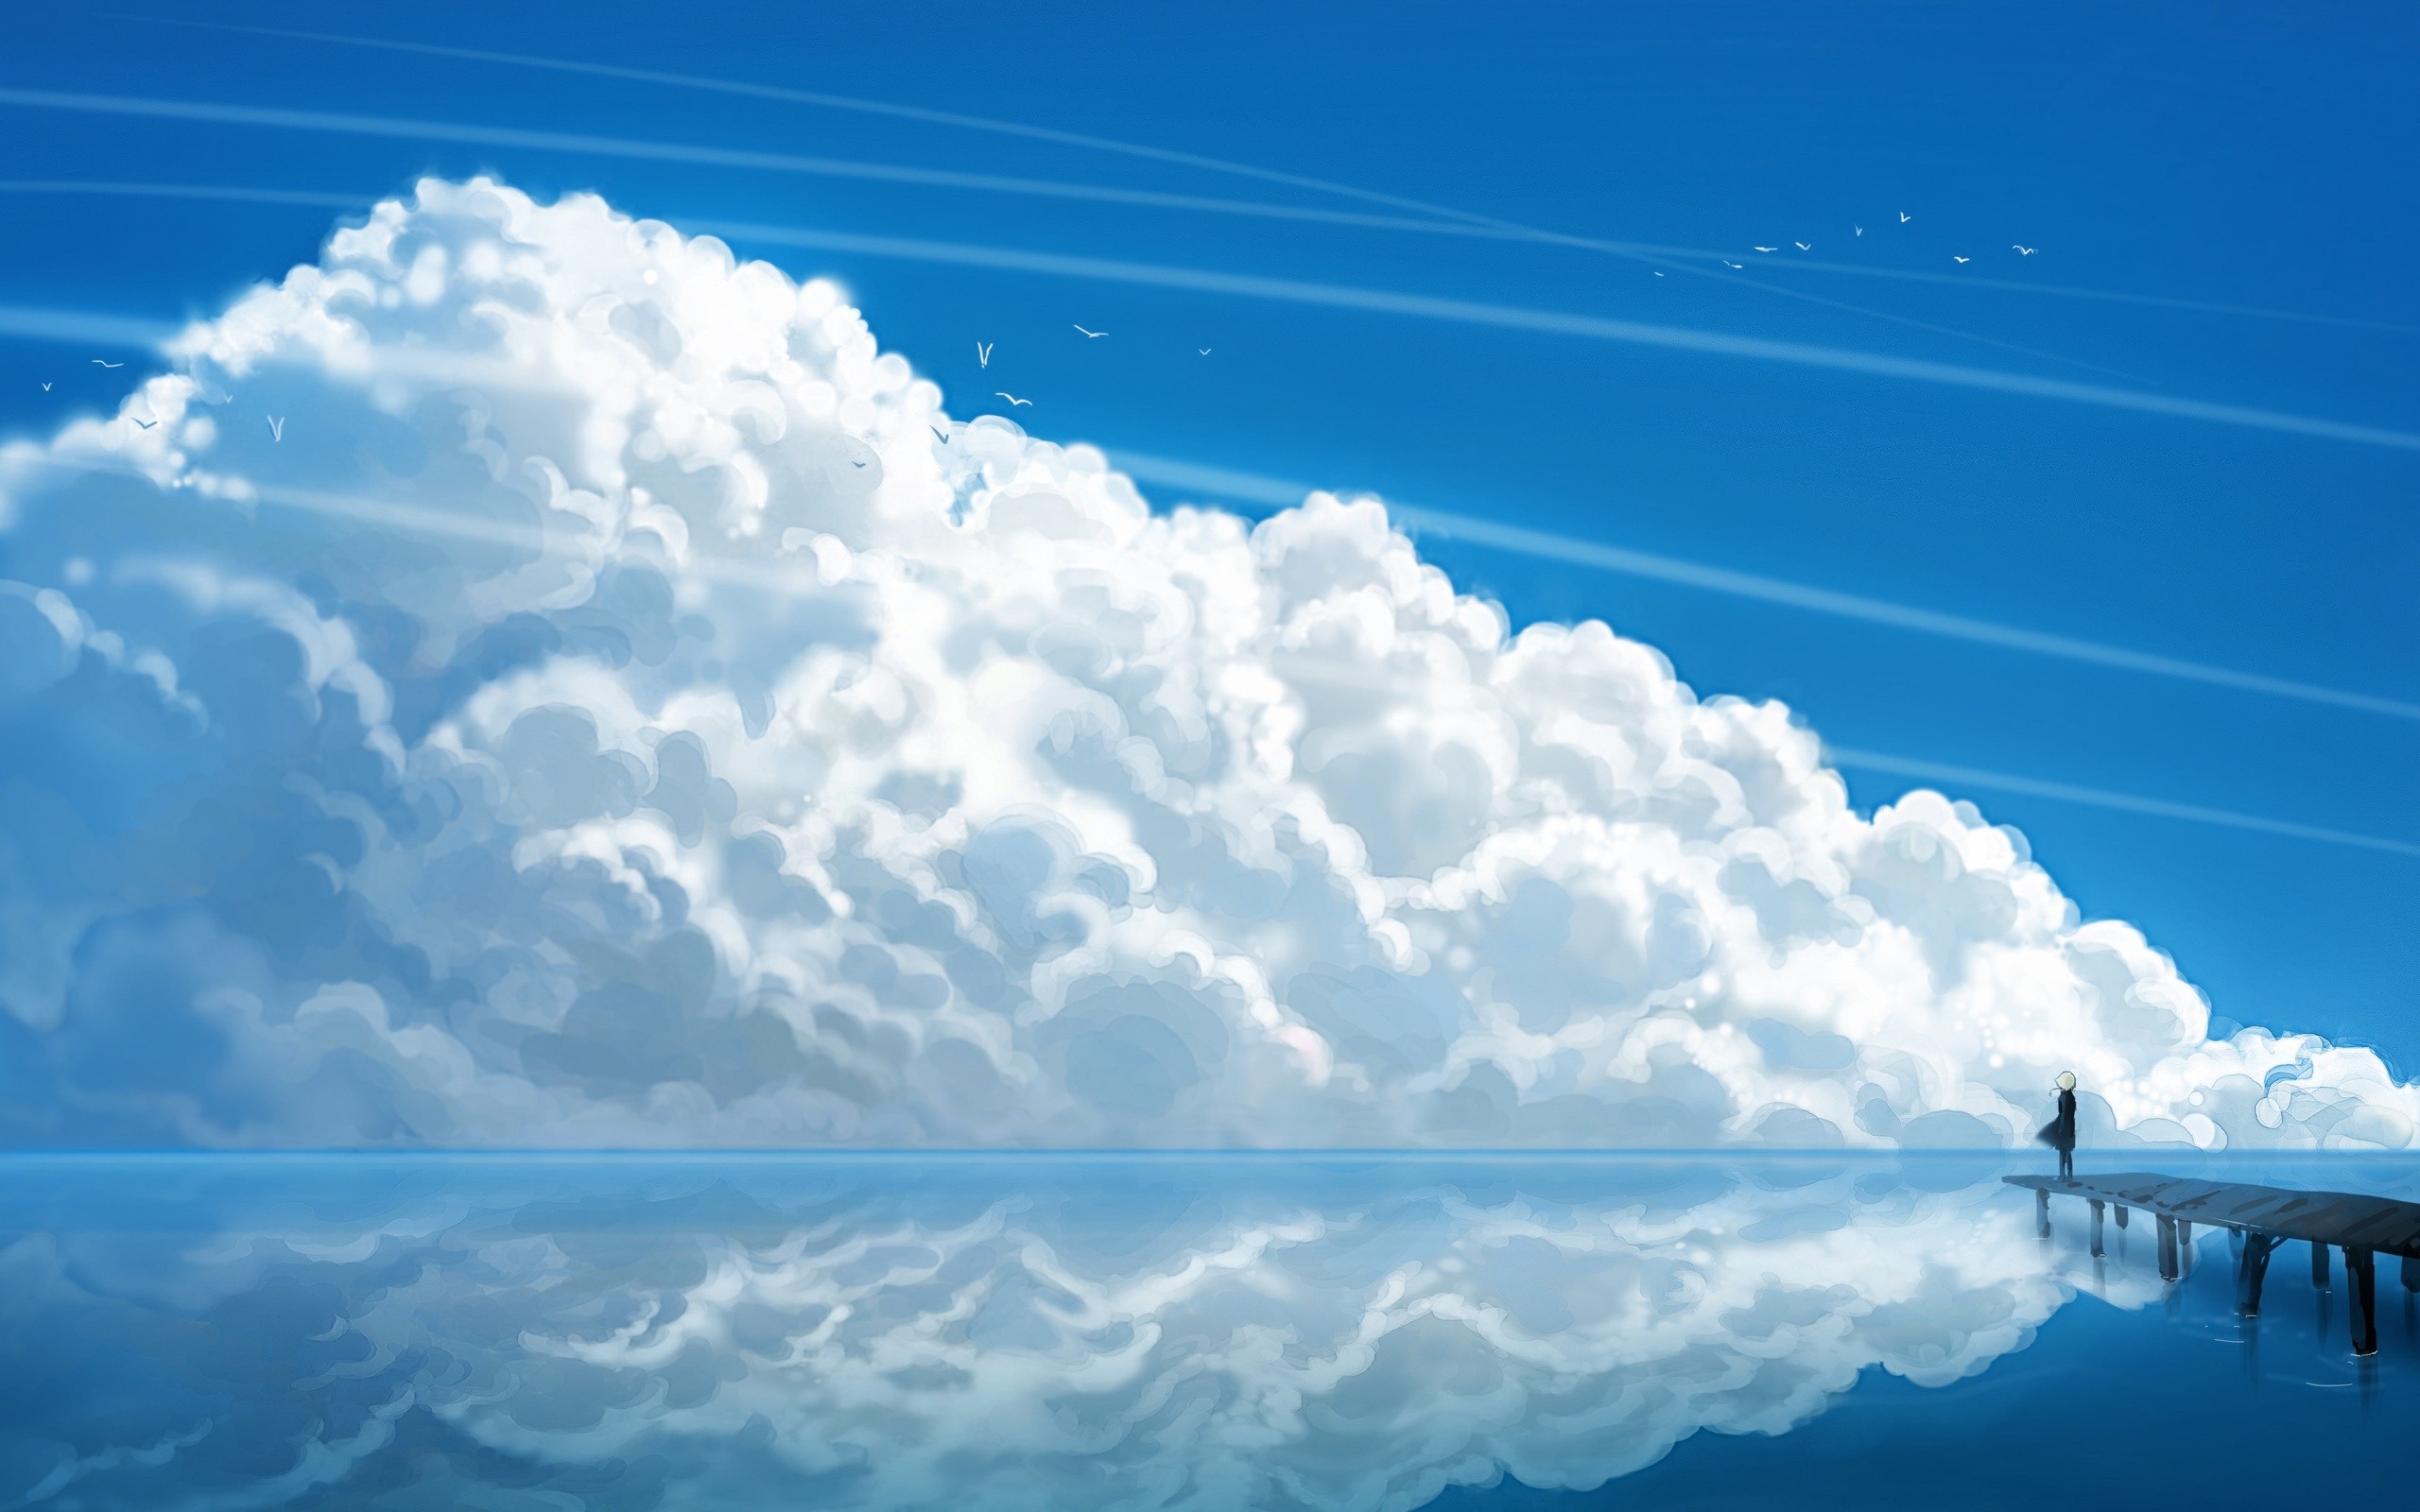 Anime 2560x1600 anime girls clouds alone sky pier reflection anime water blue women outdoors horizon nature